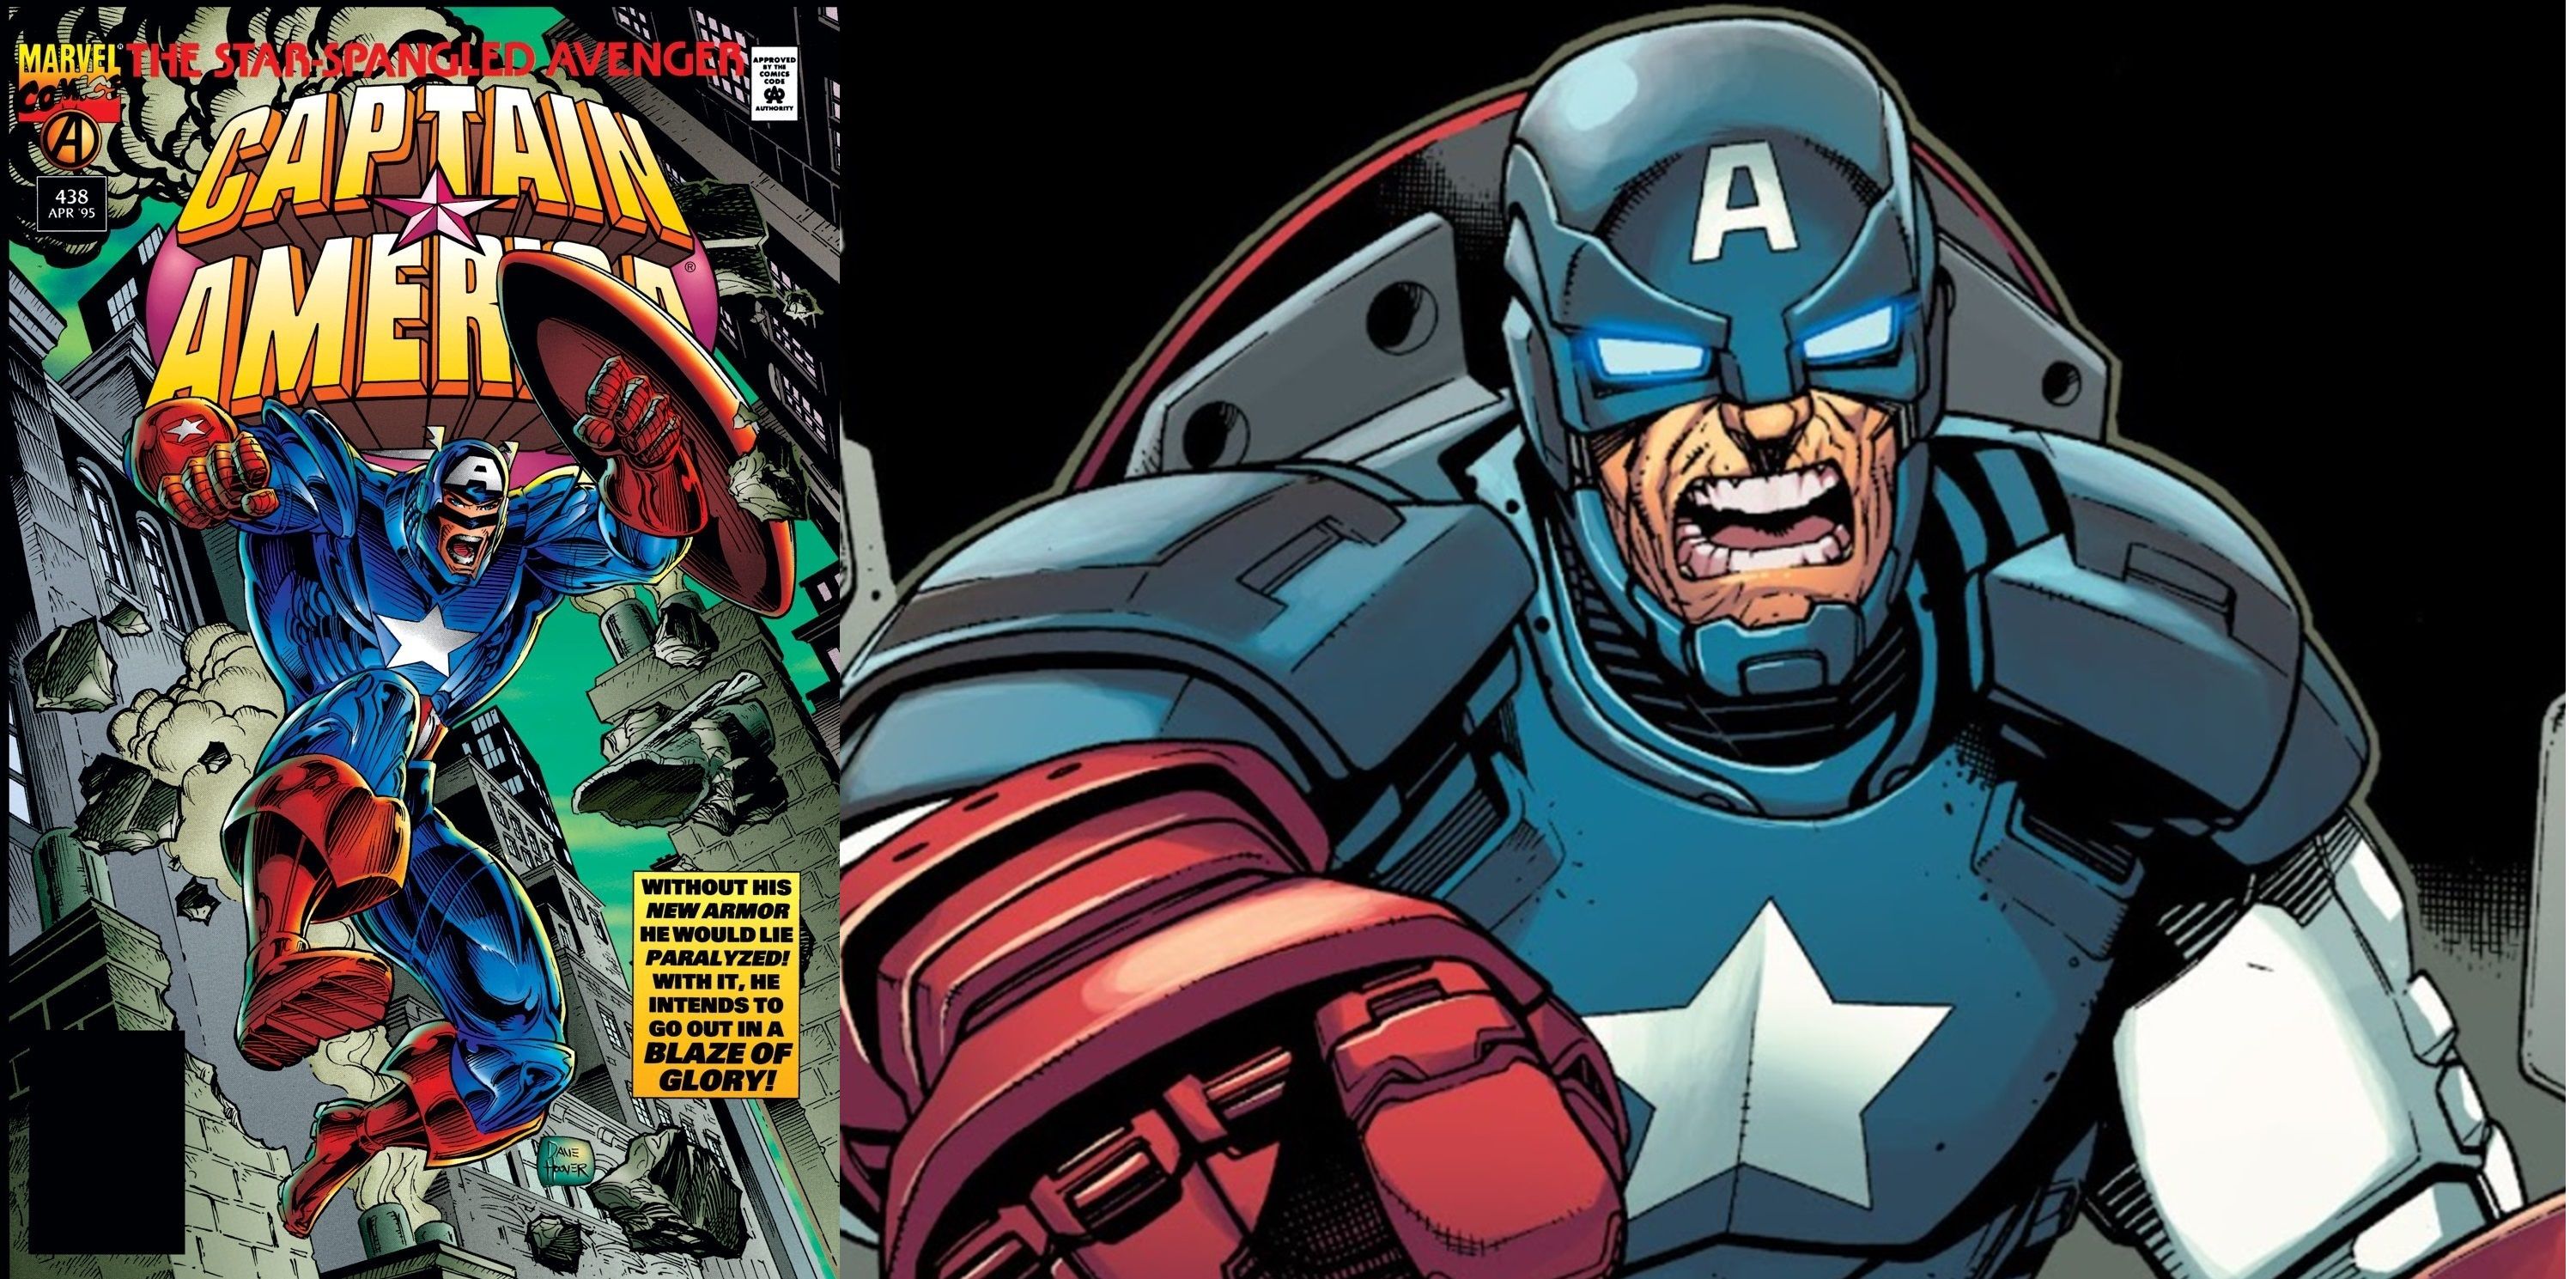 Captain America in his armors